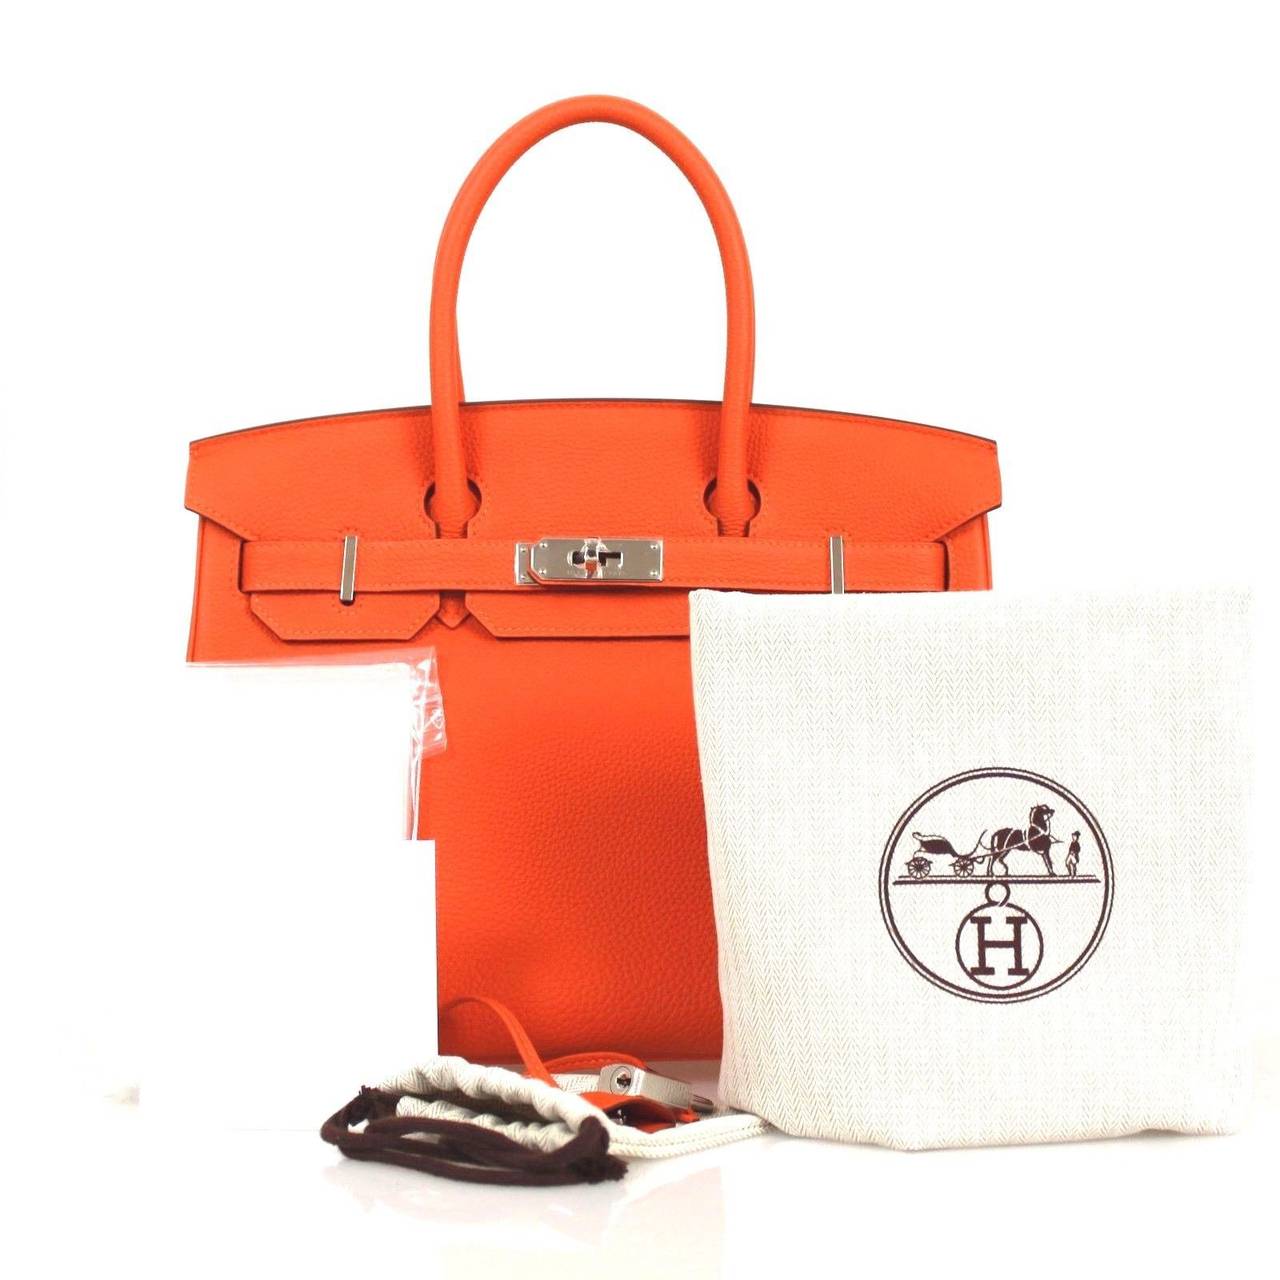 Hermes Togo Leather Silver Hdw 30 Cm Birkin Orange Tote Bag 6